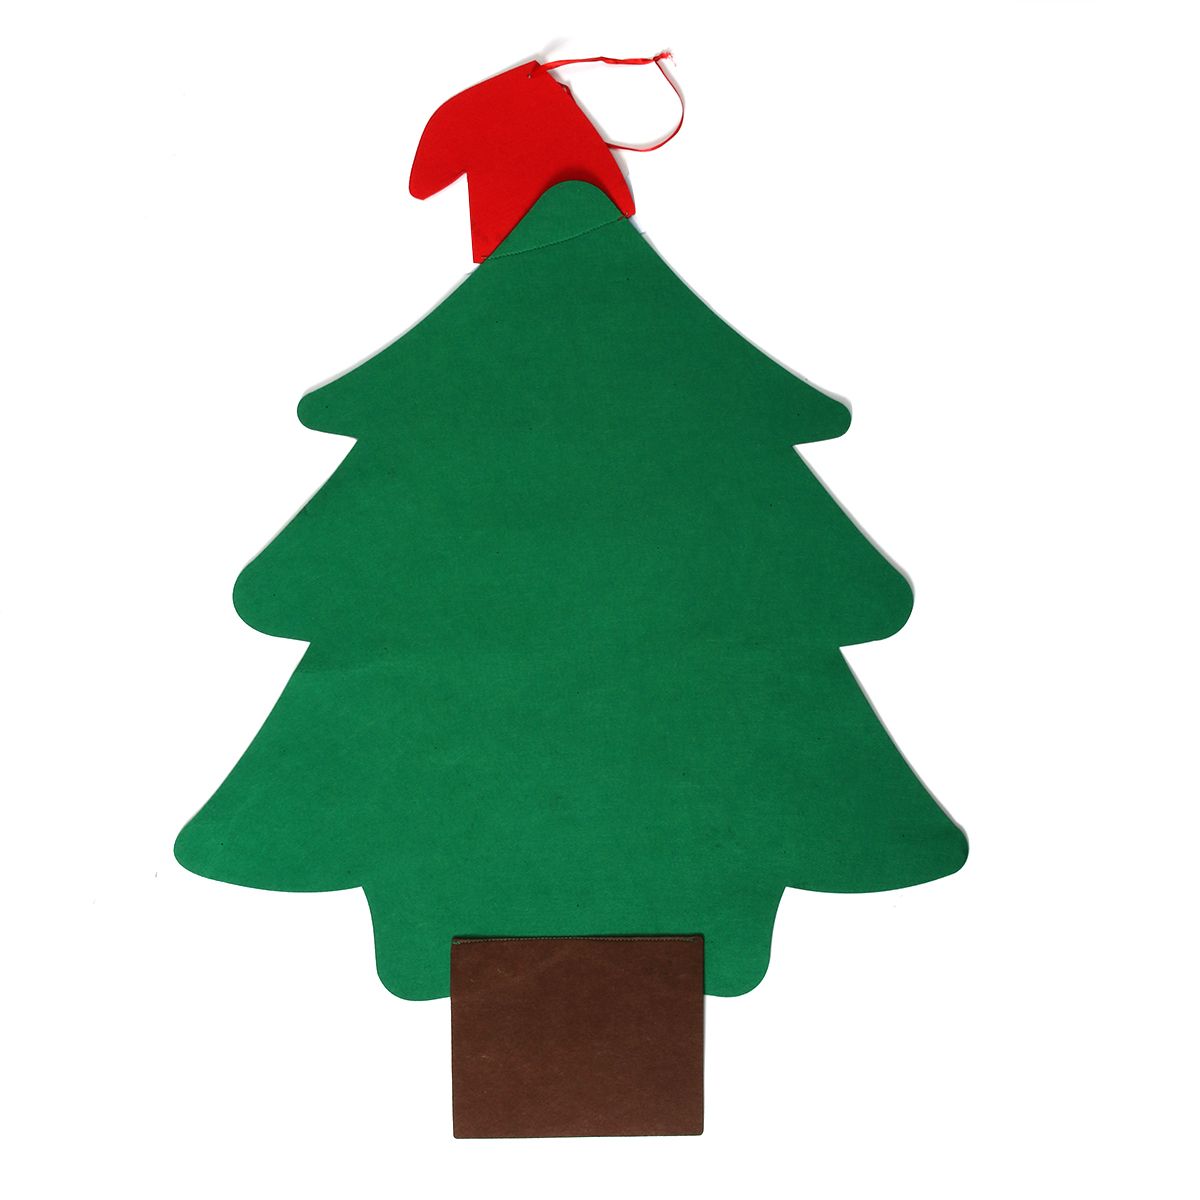 SAFETYON-DIY-Felt-Christmas-Tree-With-37PCS-Ornaments-1898979